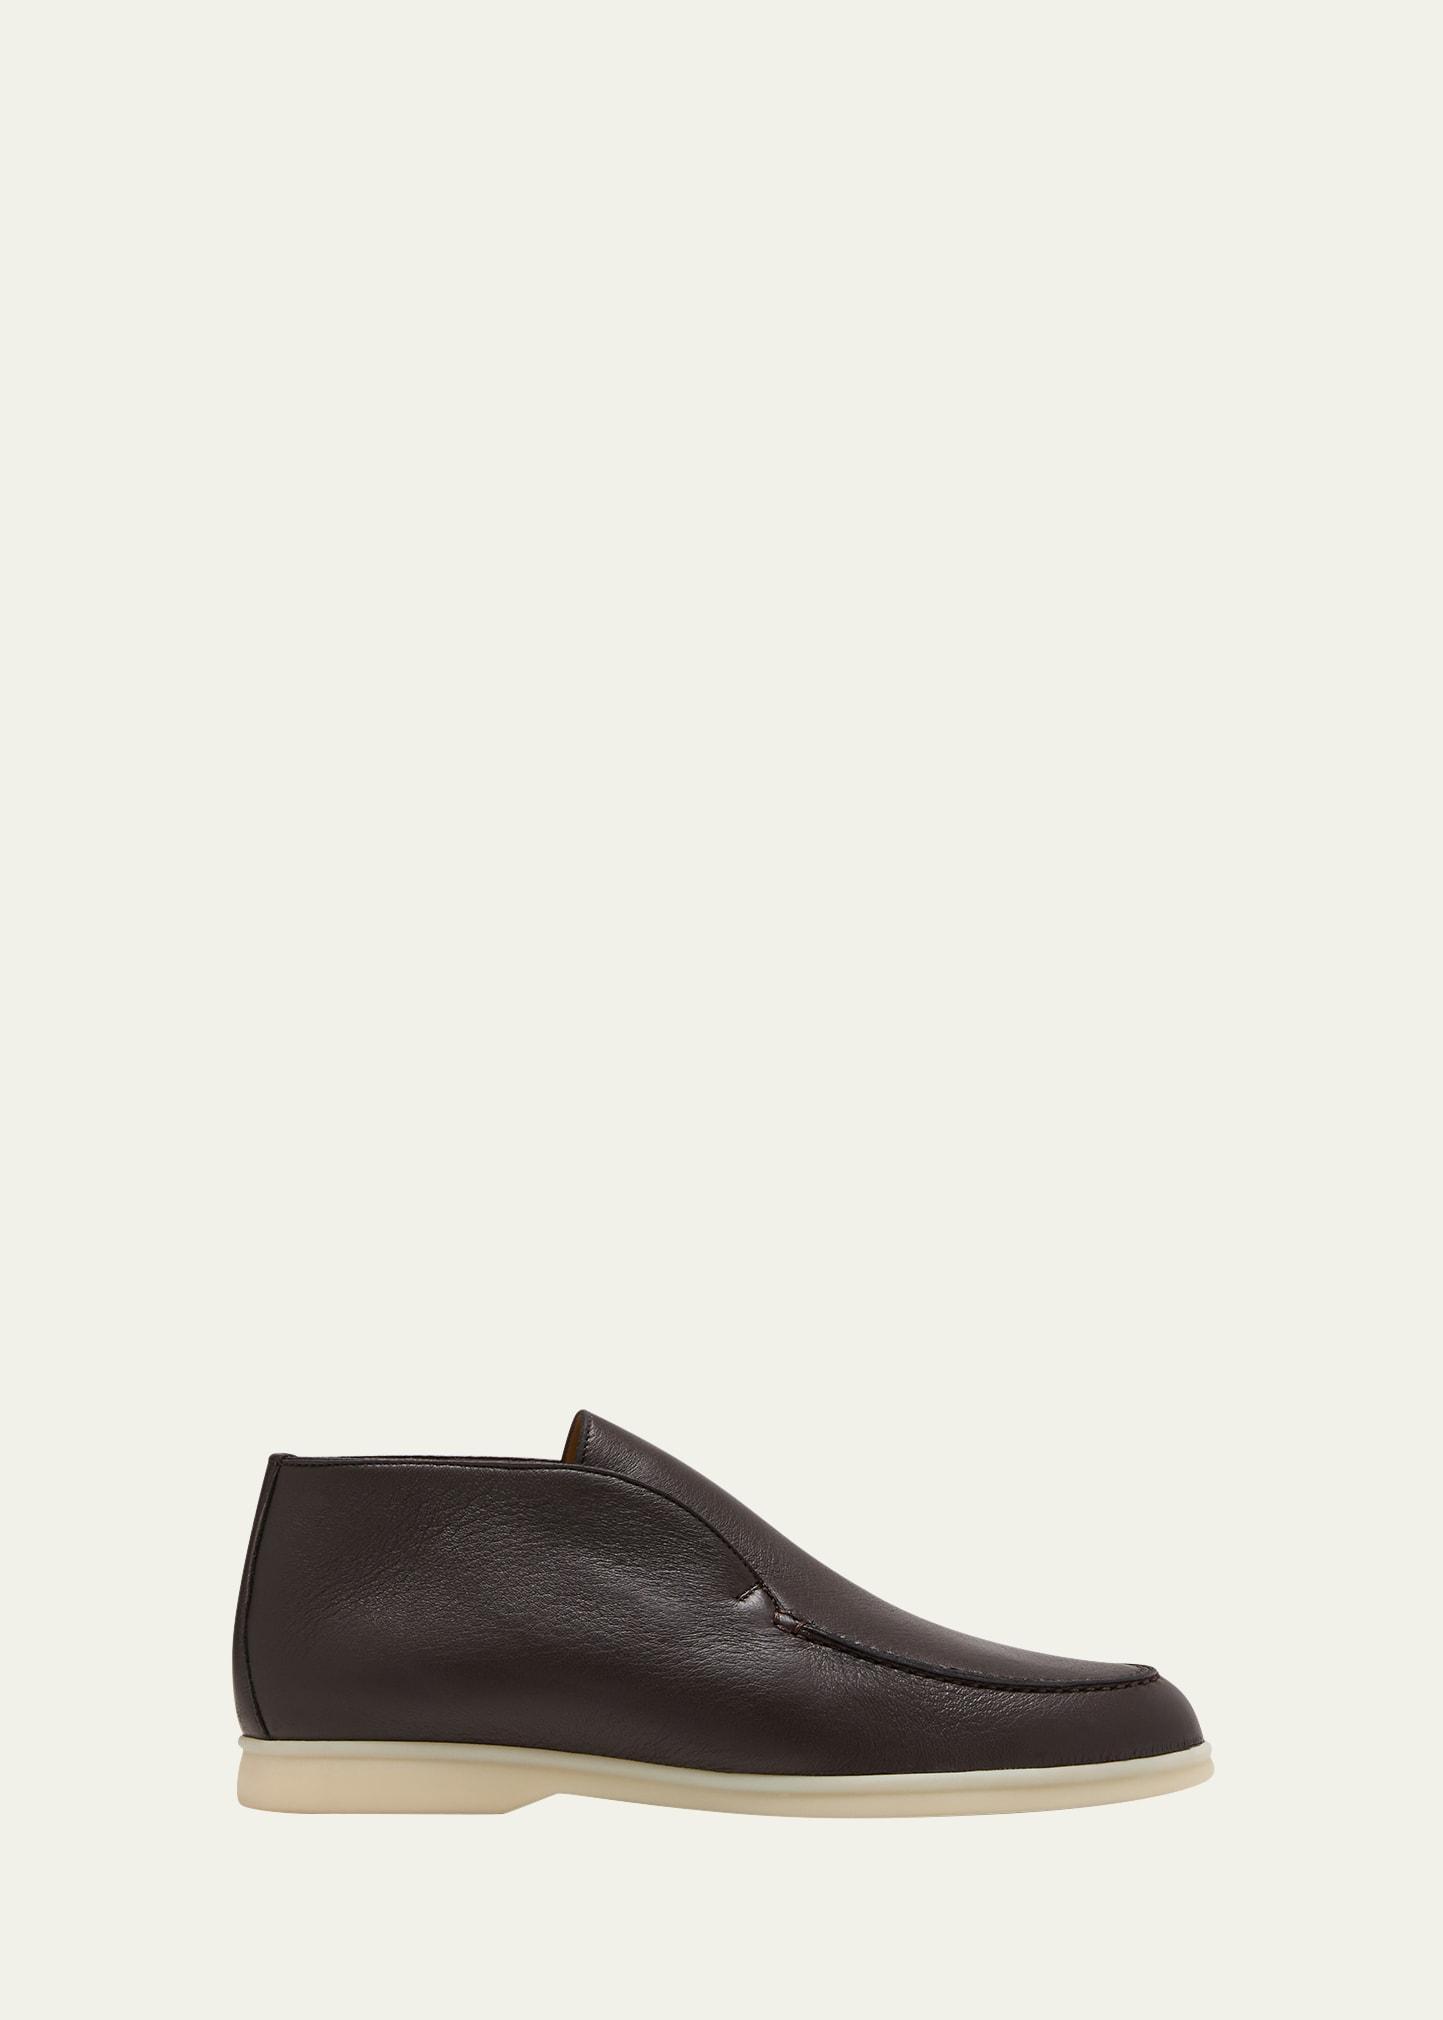 Loro Piana Leather Chukka Boot Product Image